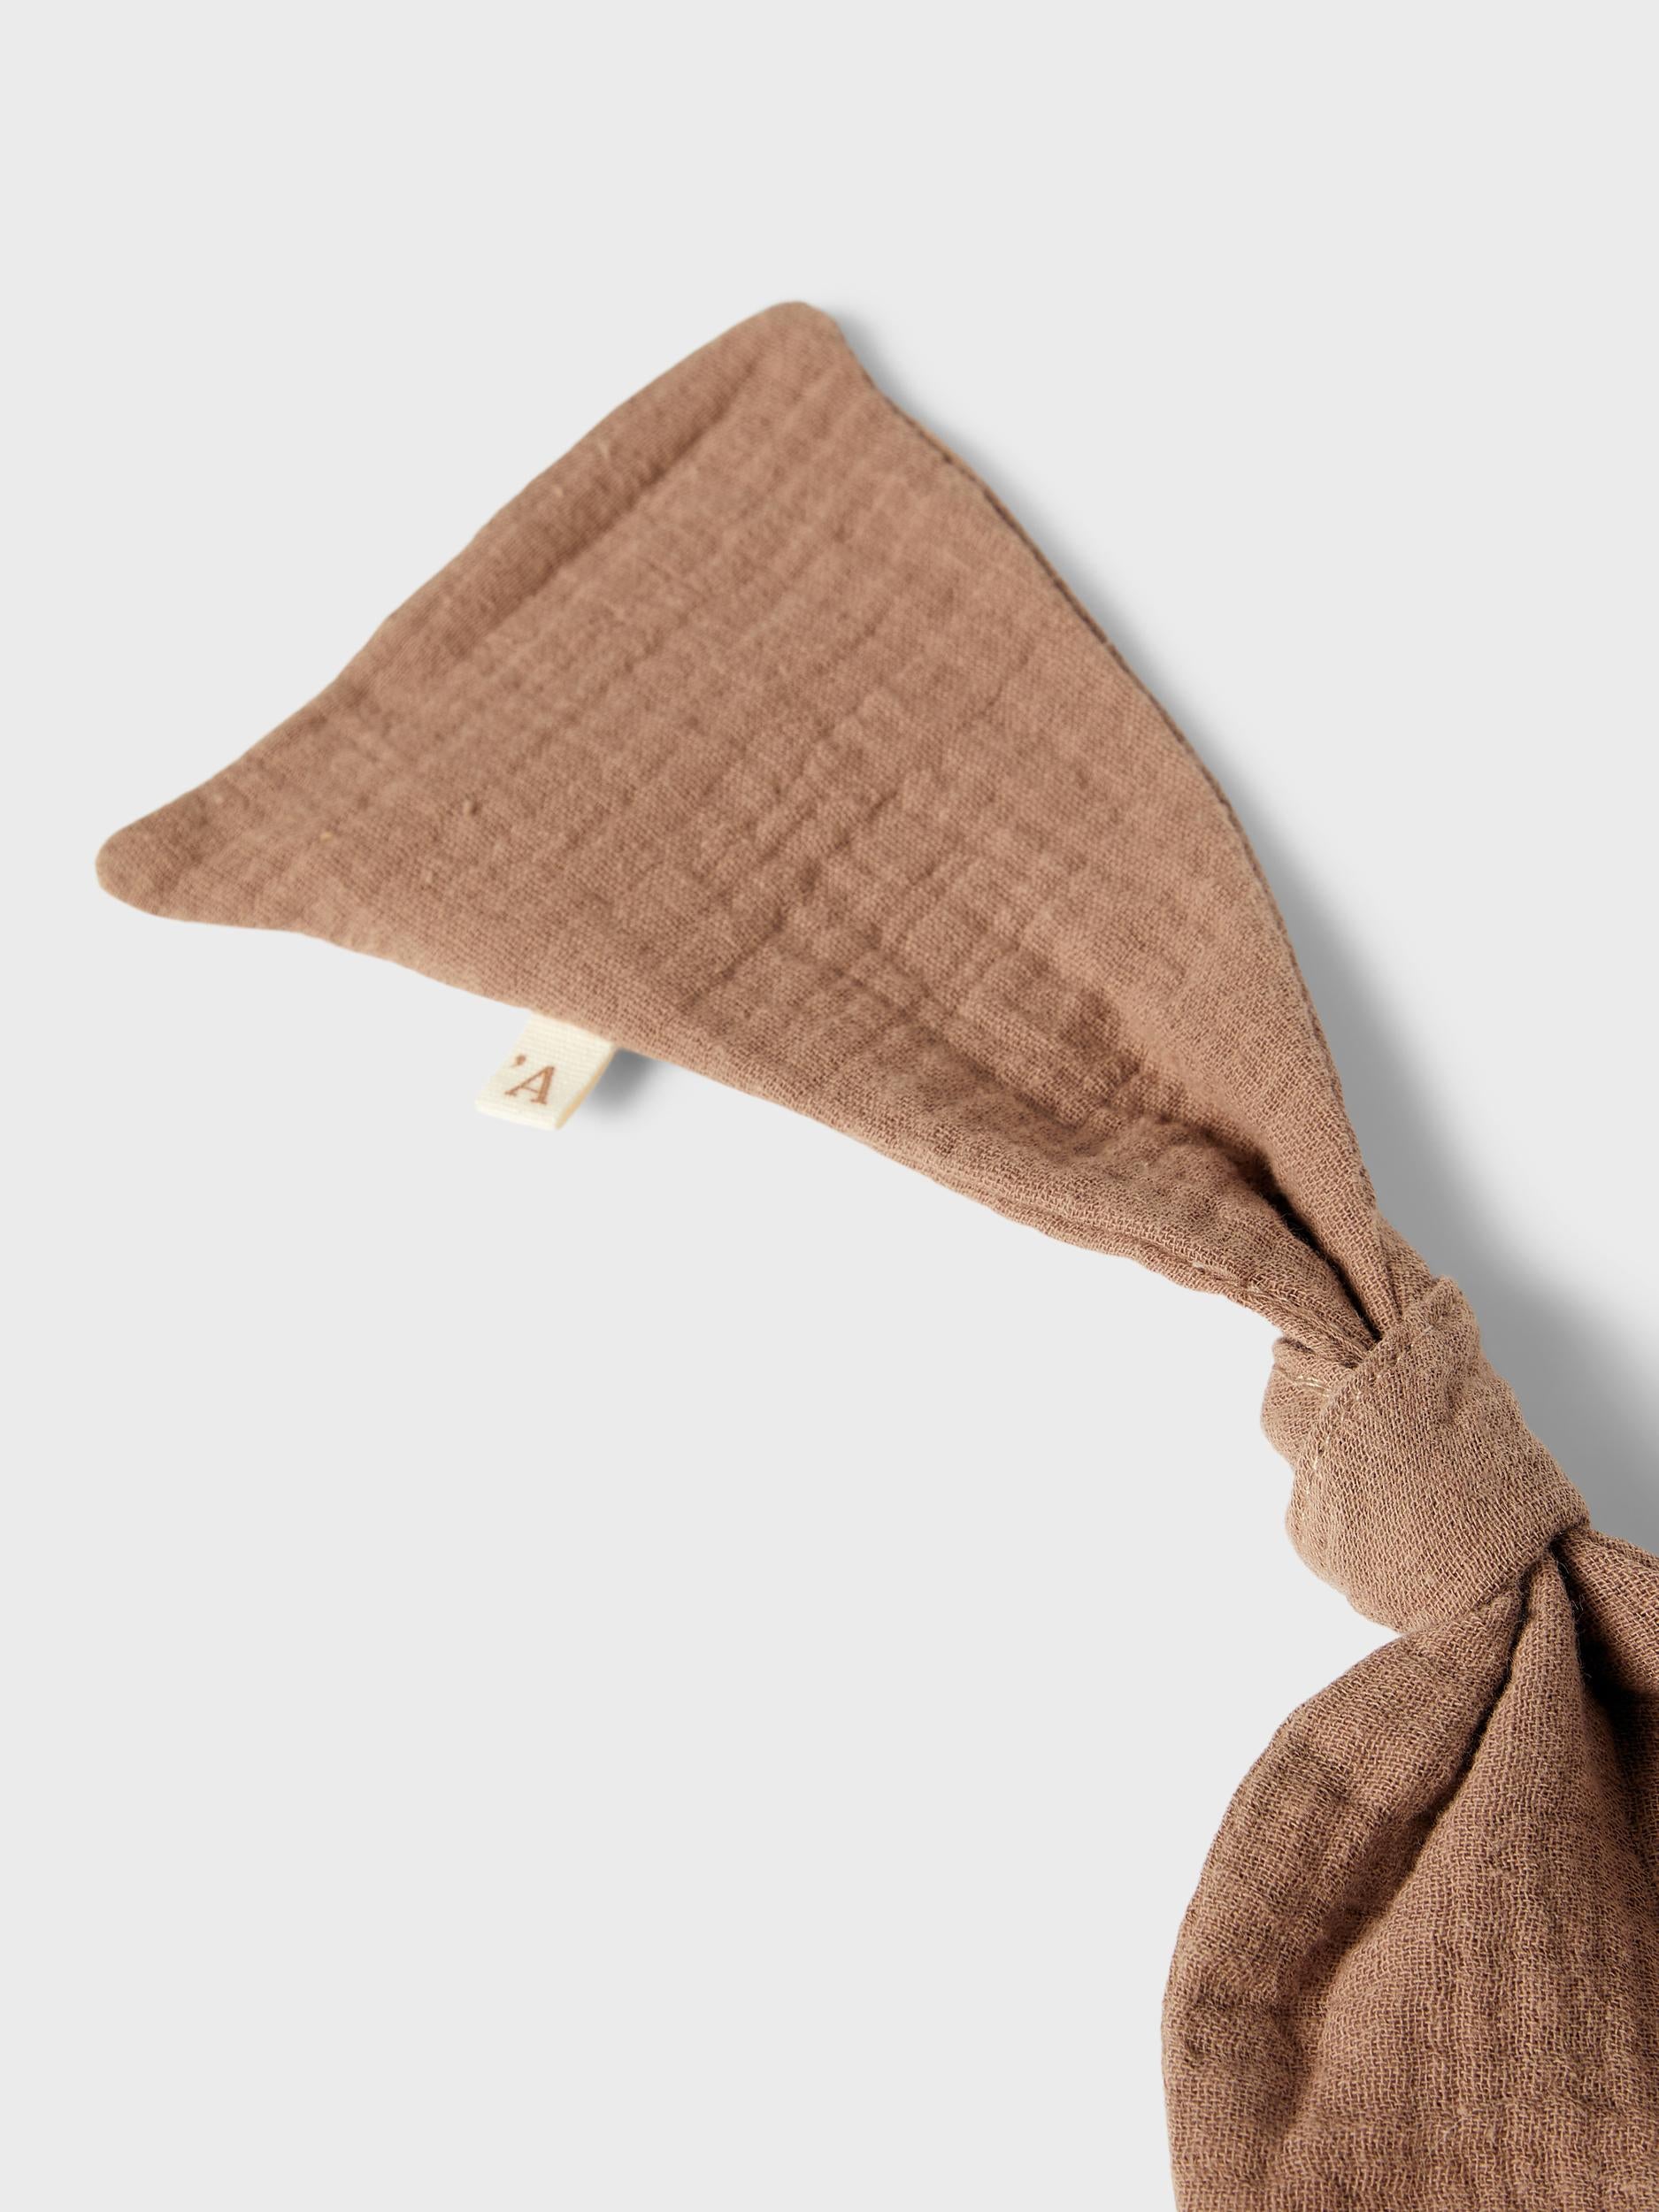 Domi Cuddle Cloth - Tobacco Brown